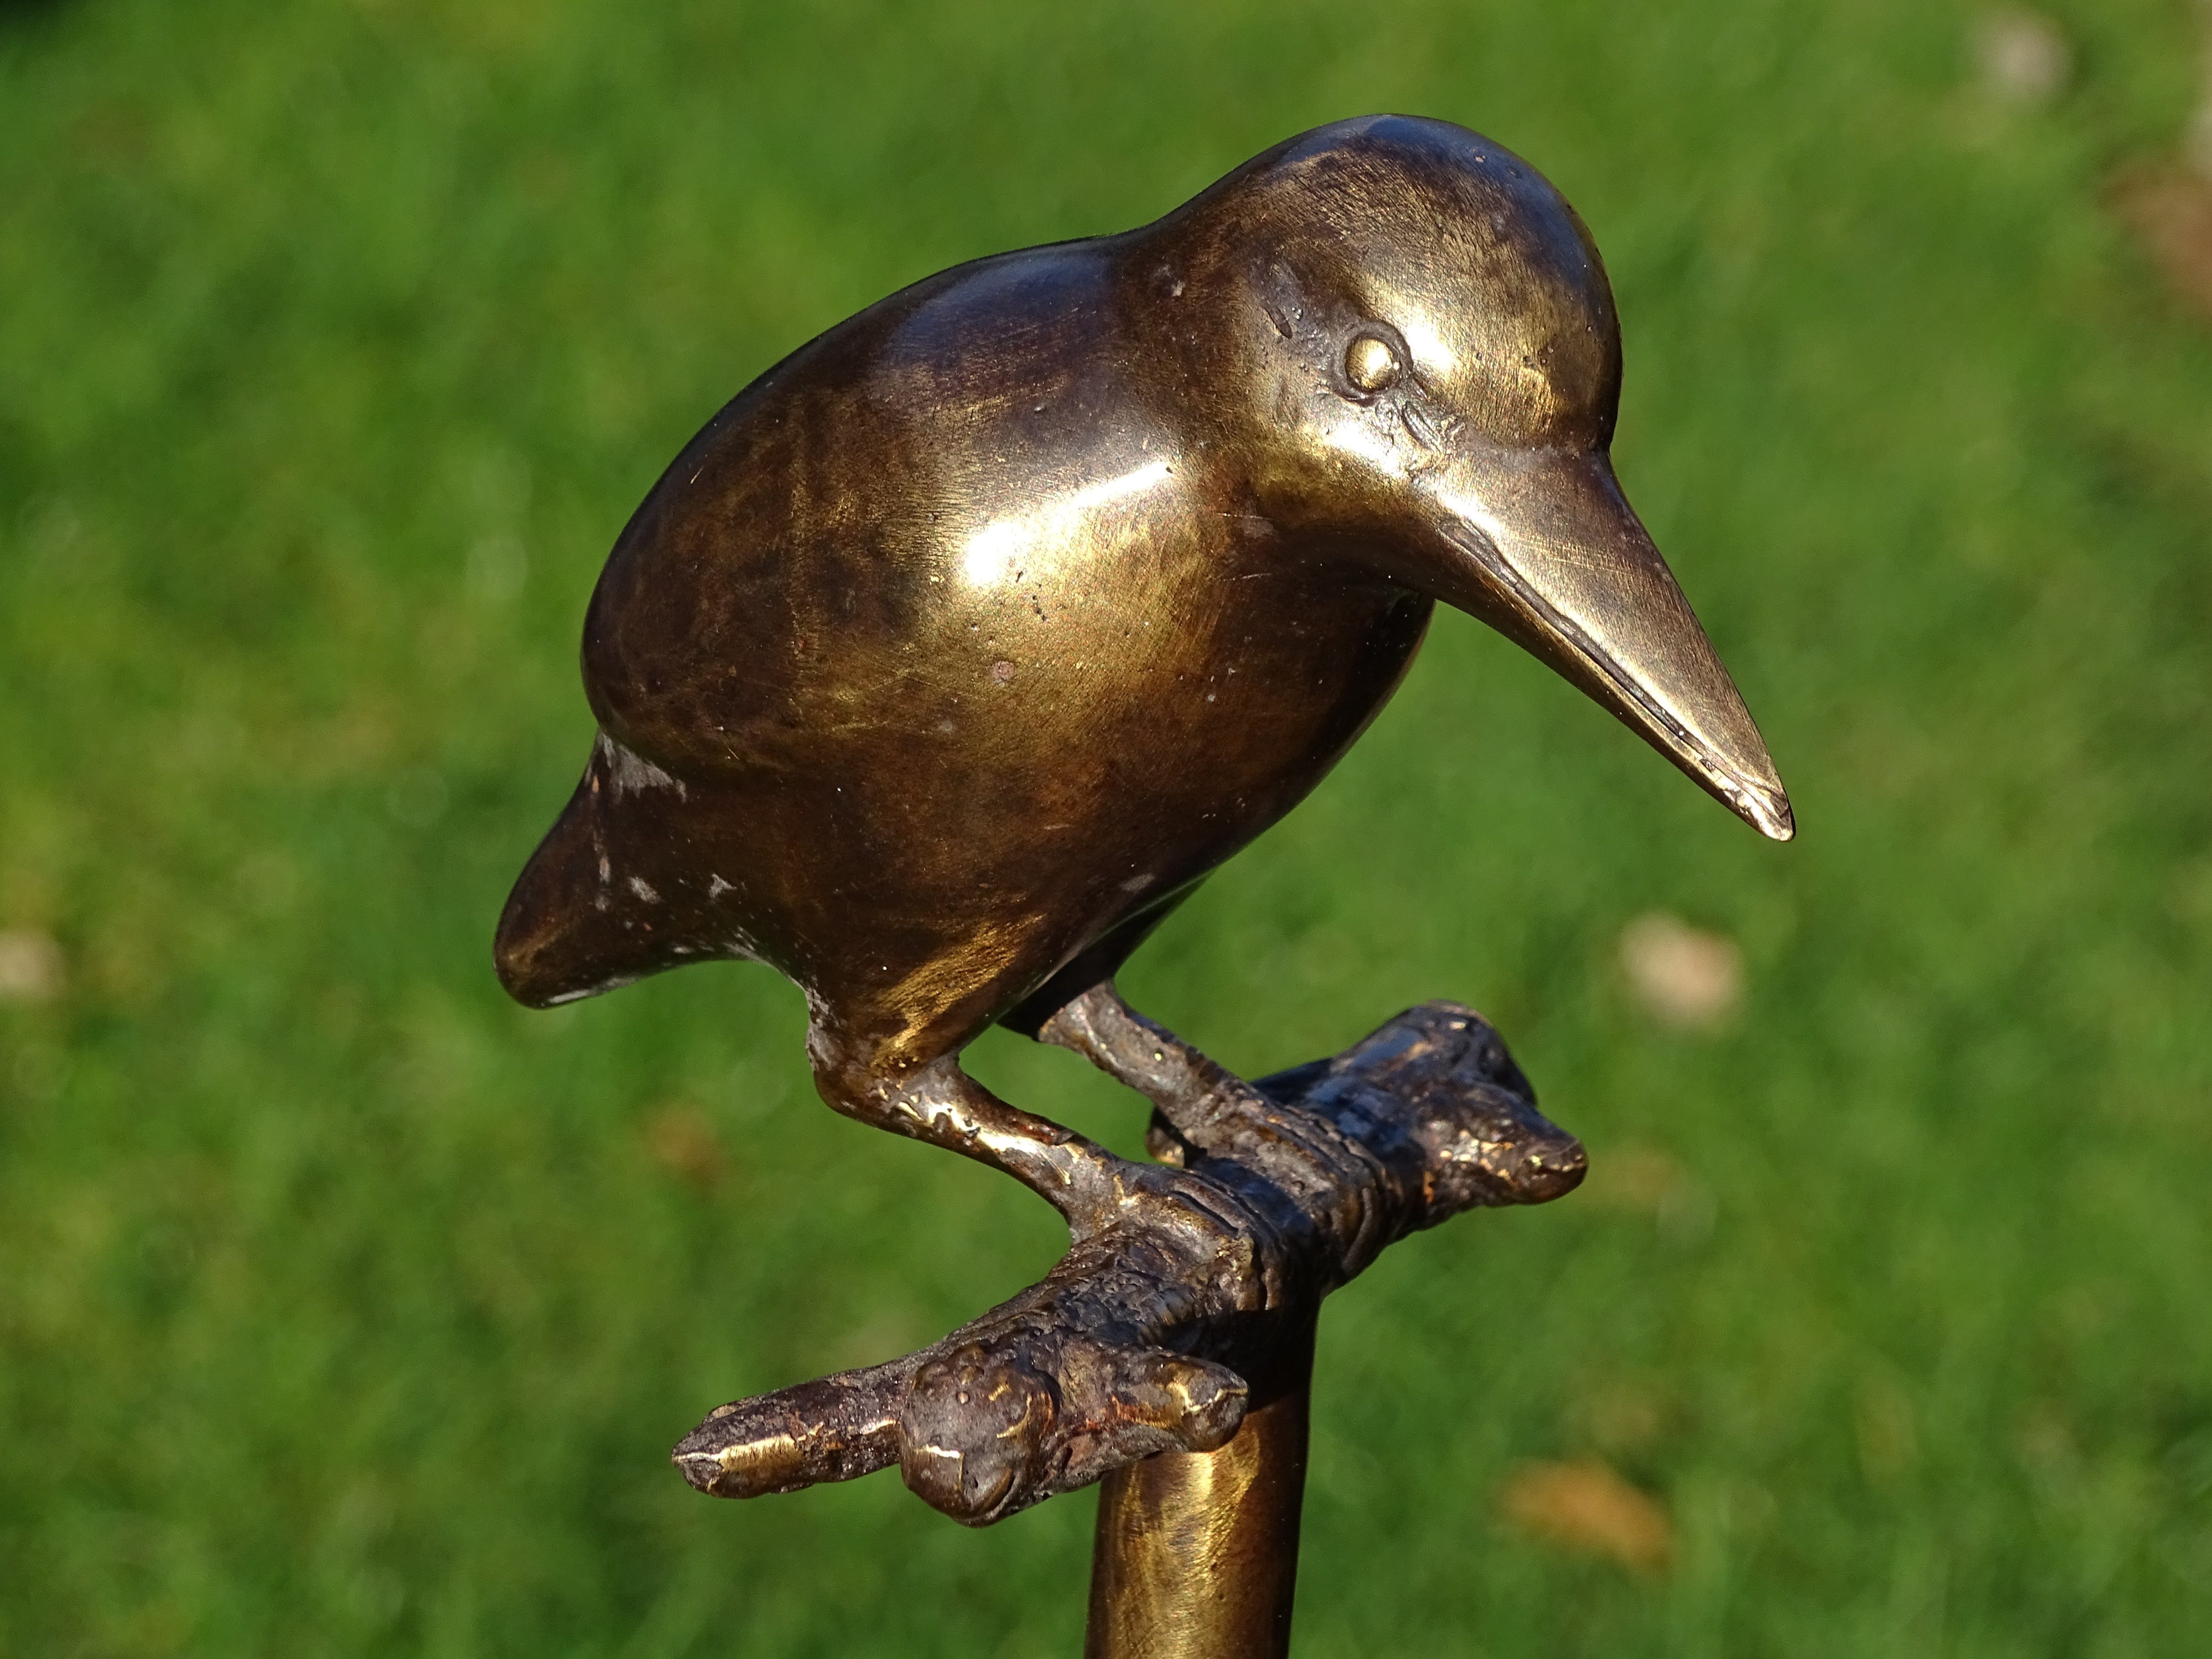 IDYL Dekofigur IDYL Bronze-Skulptur Eisvogel auf Ast